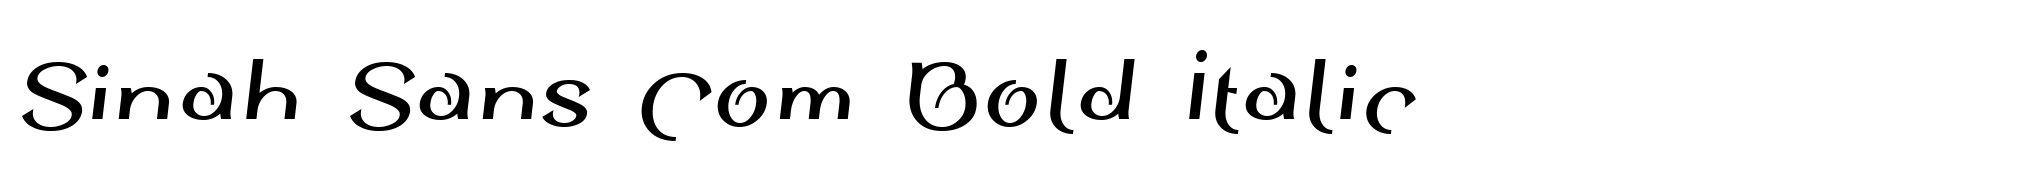 Sinah Sans Com Bold Italic image